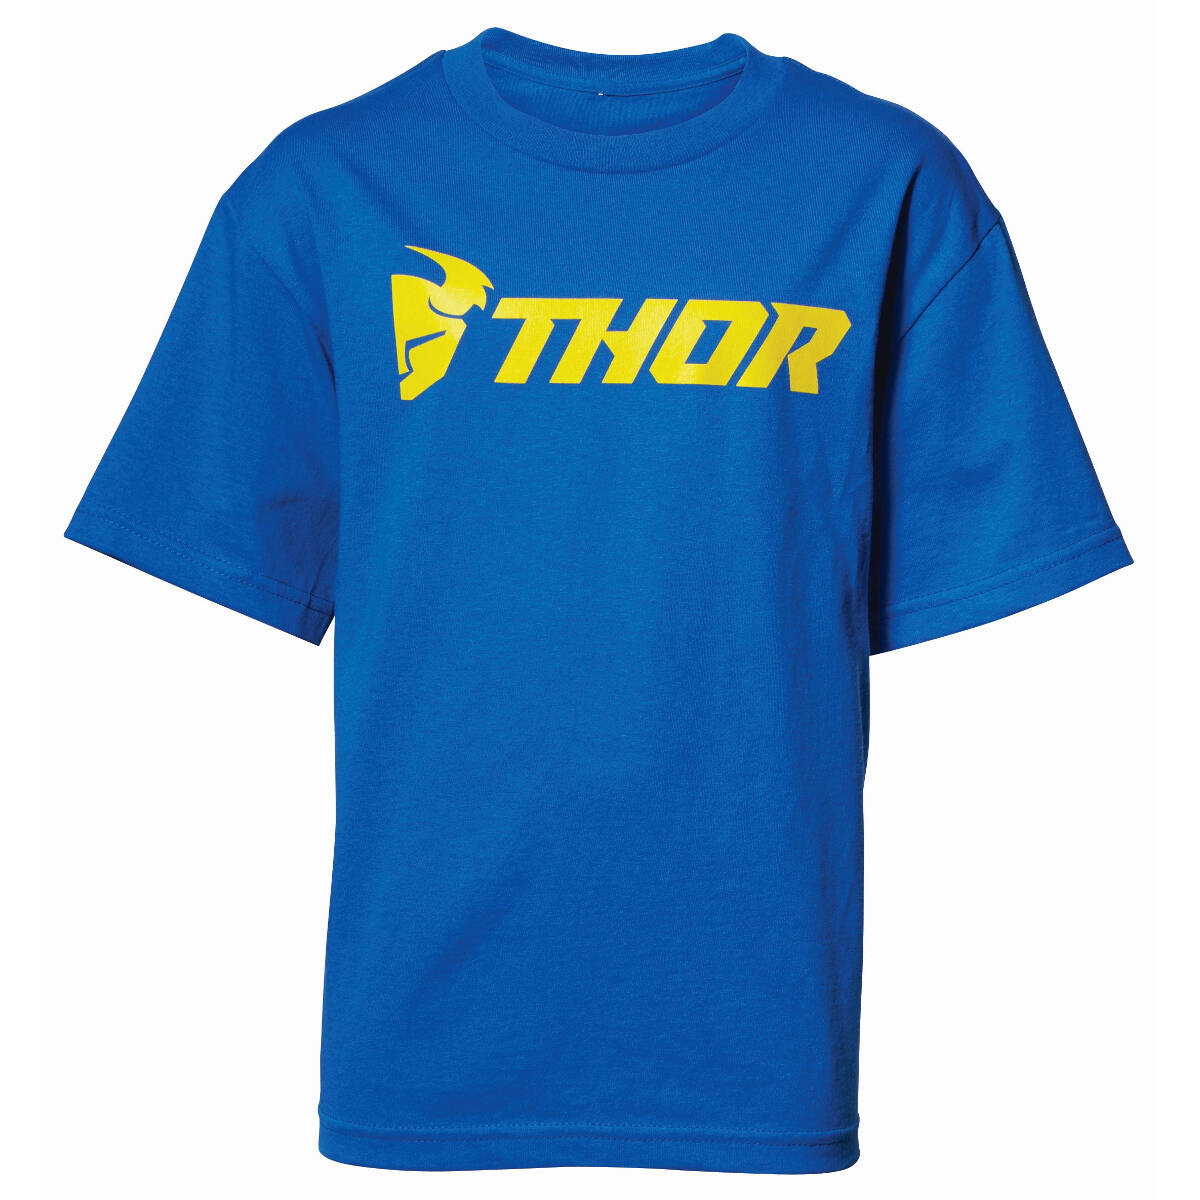 Thor Kids T-Shirt Loud Royal